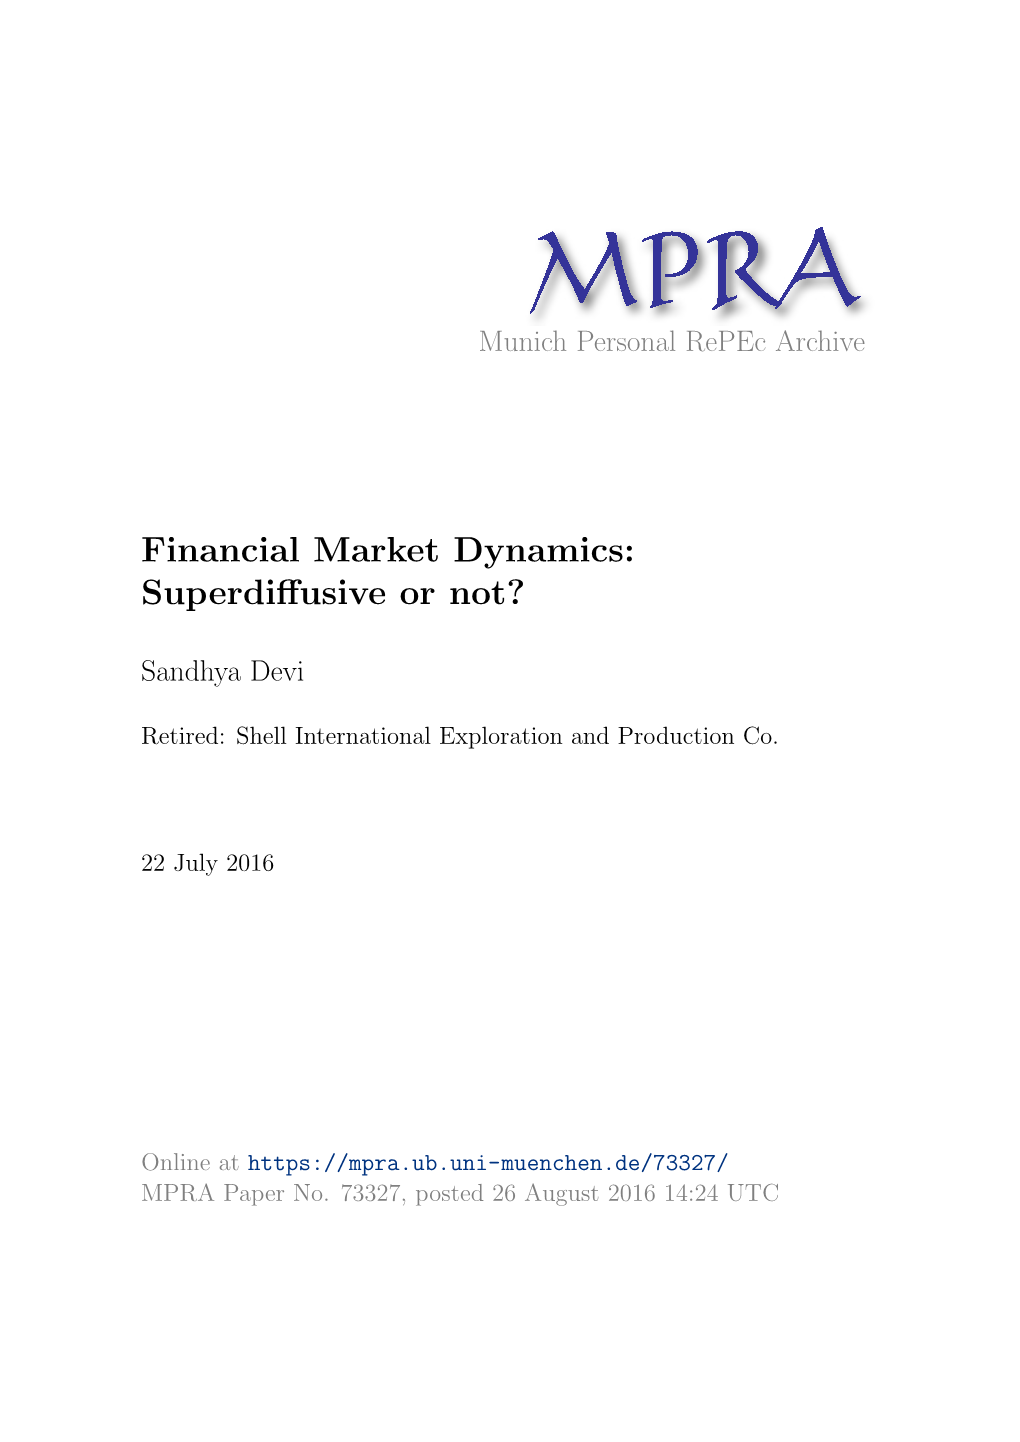 Financial Market Dynamics: Superdiffusive Or Not? Sandhya Devi† Edmonds, WA, 98020, USA August 24, 2016